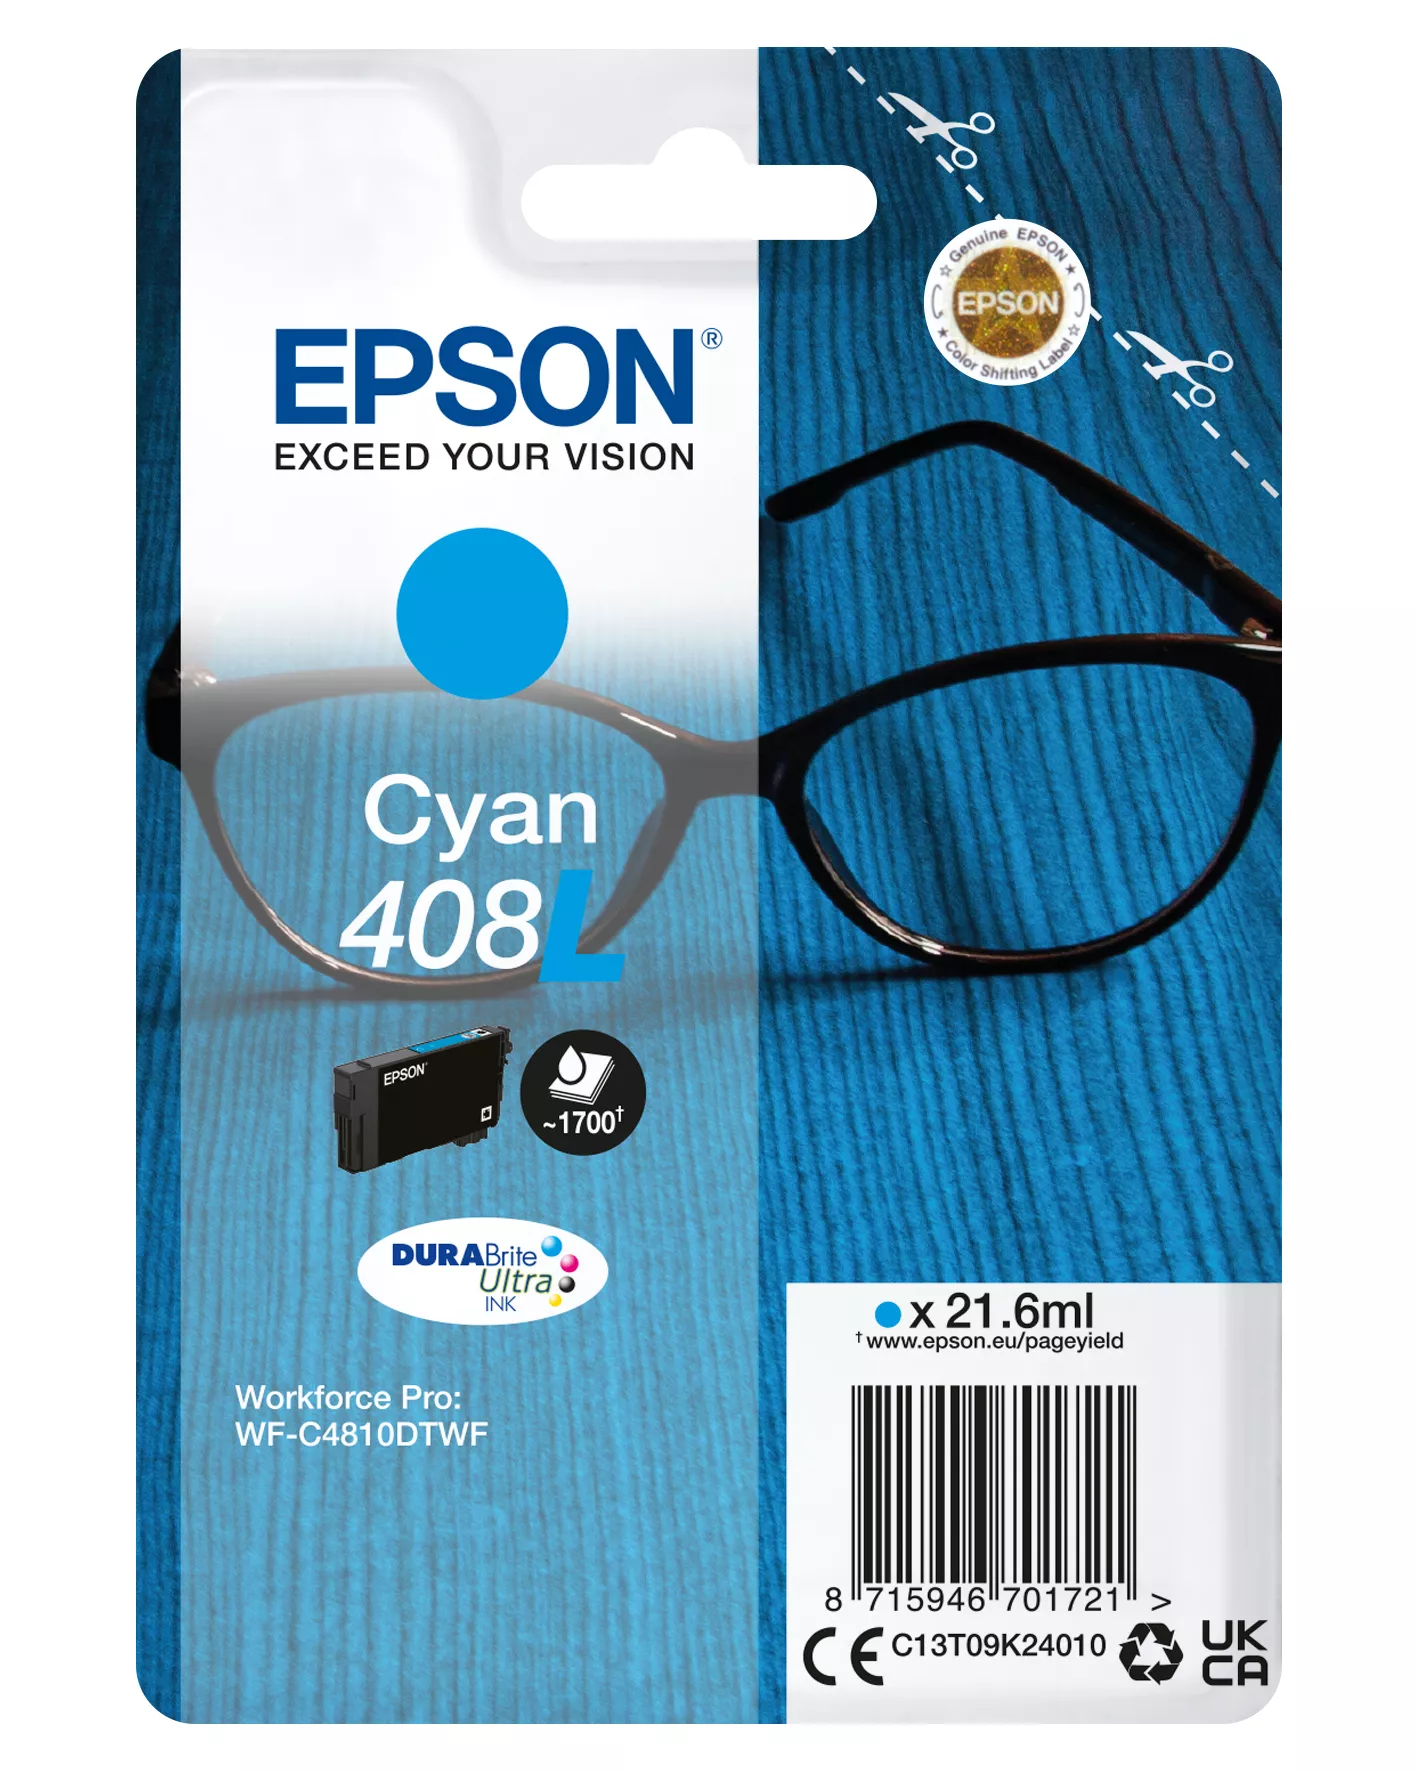 Achat EPSON Singlepack Cyan 408L DURABrite Ultra Ink au meilleur prix